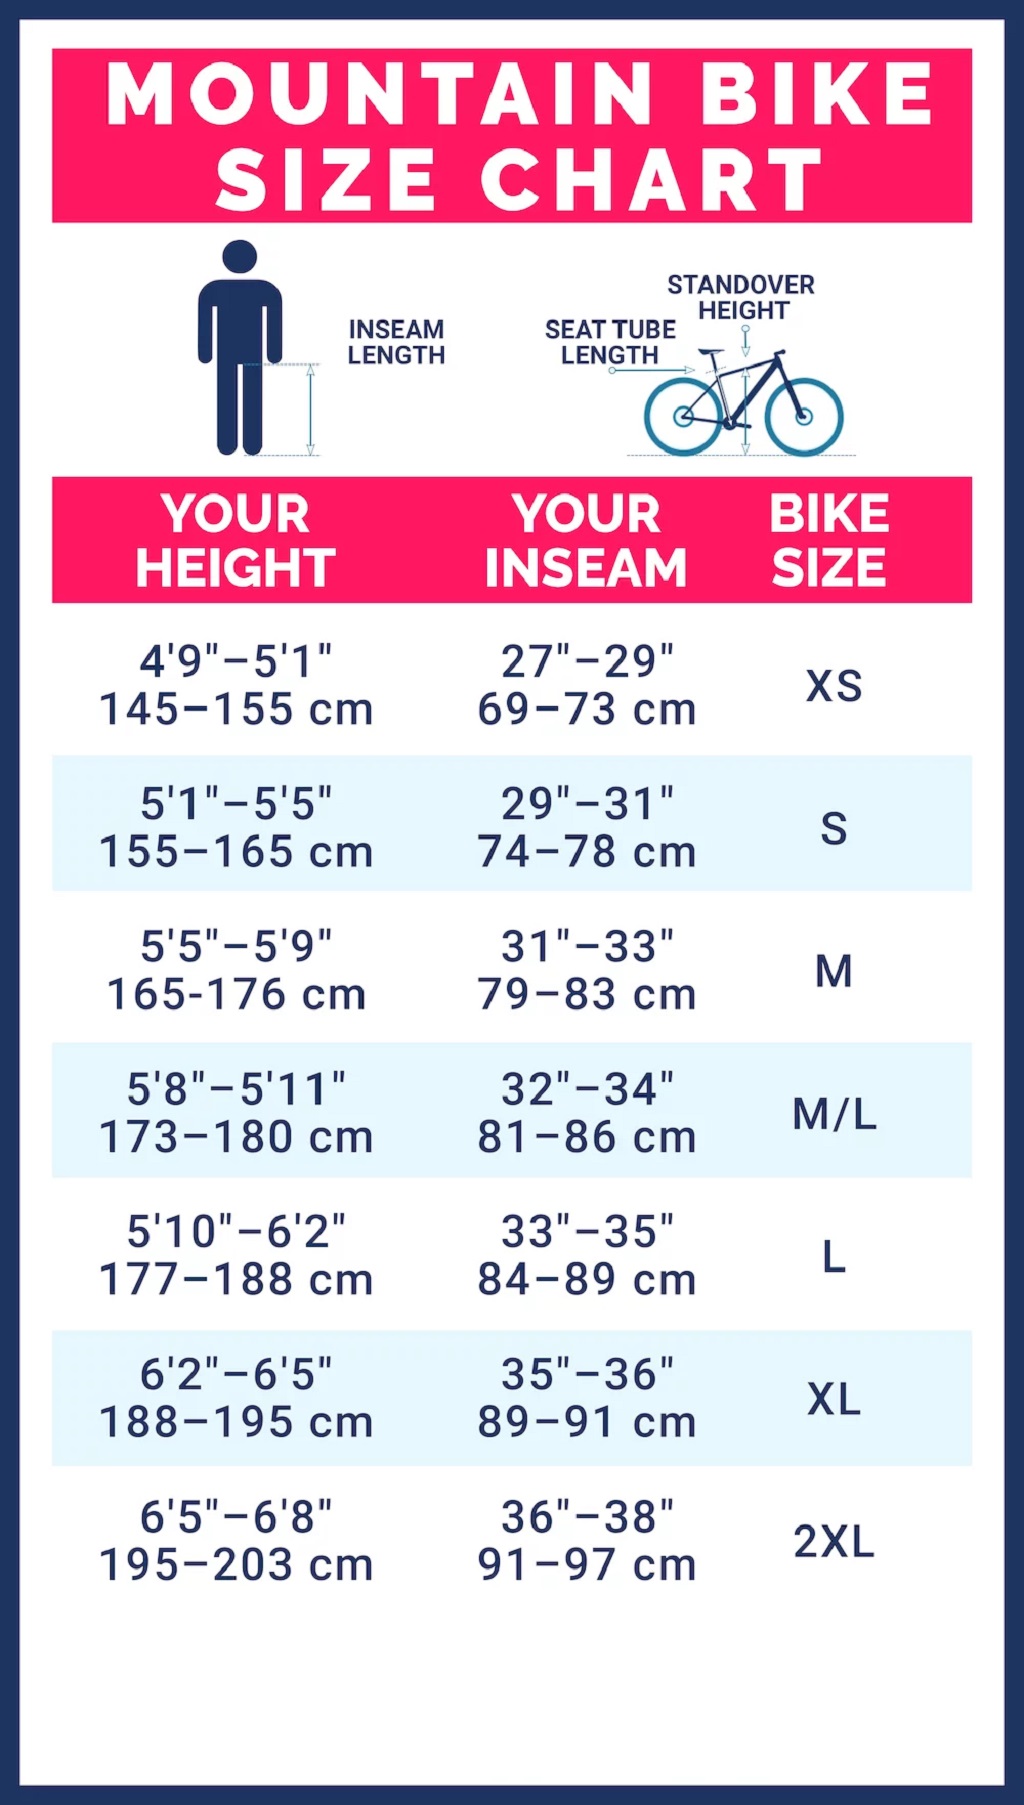 Consider When Choosing a Bike Size 